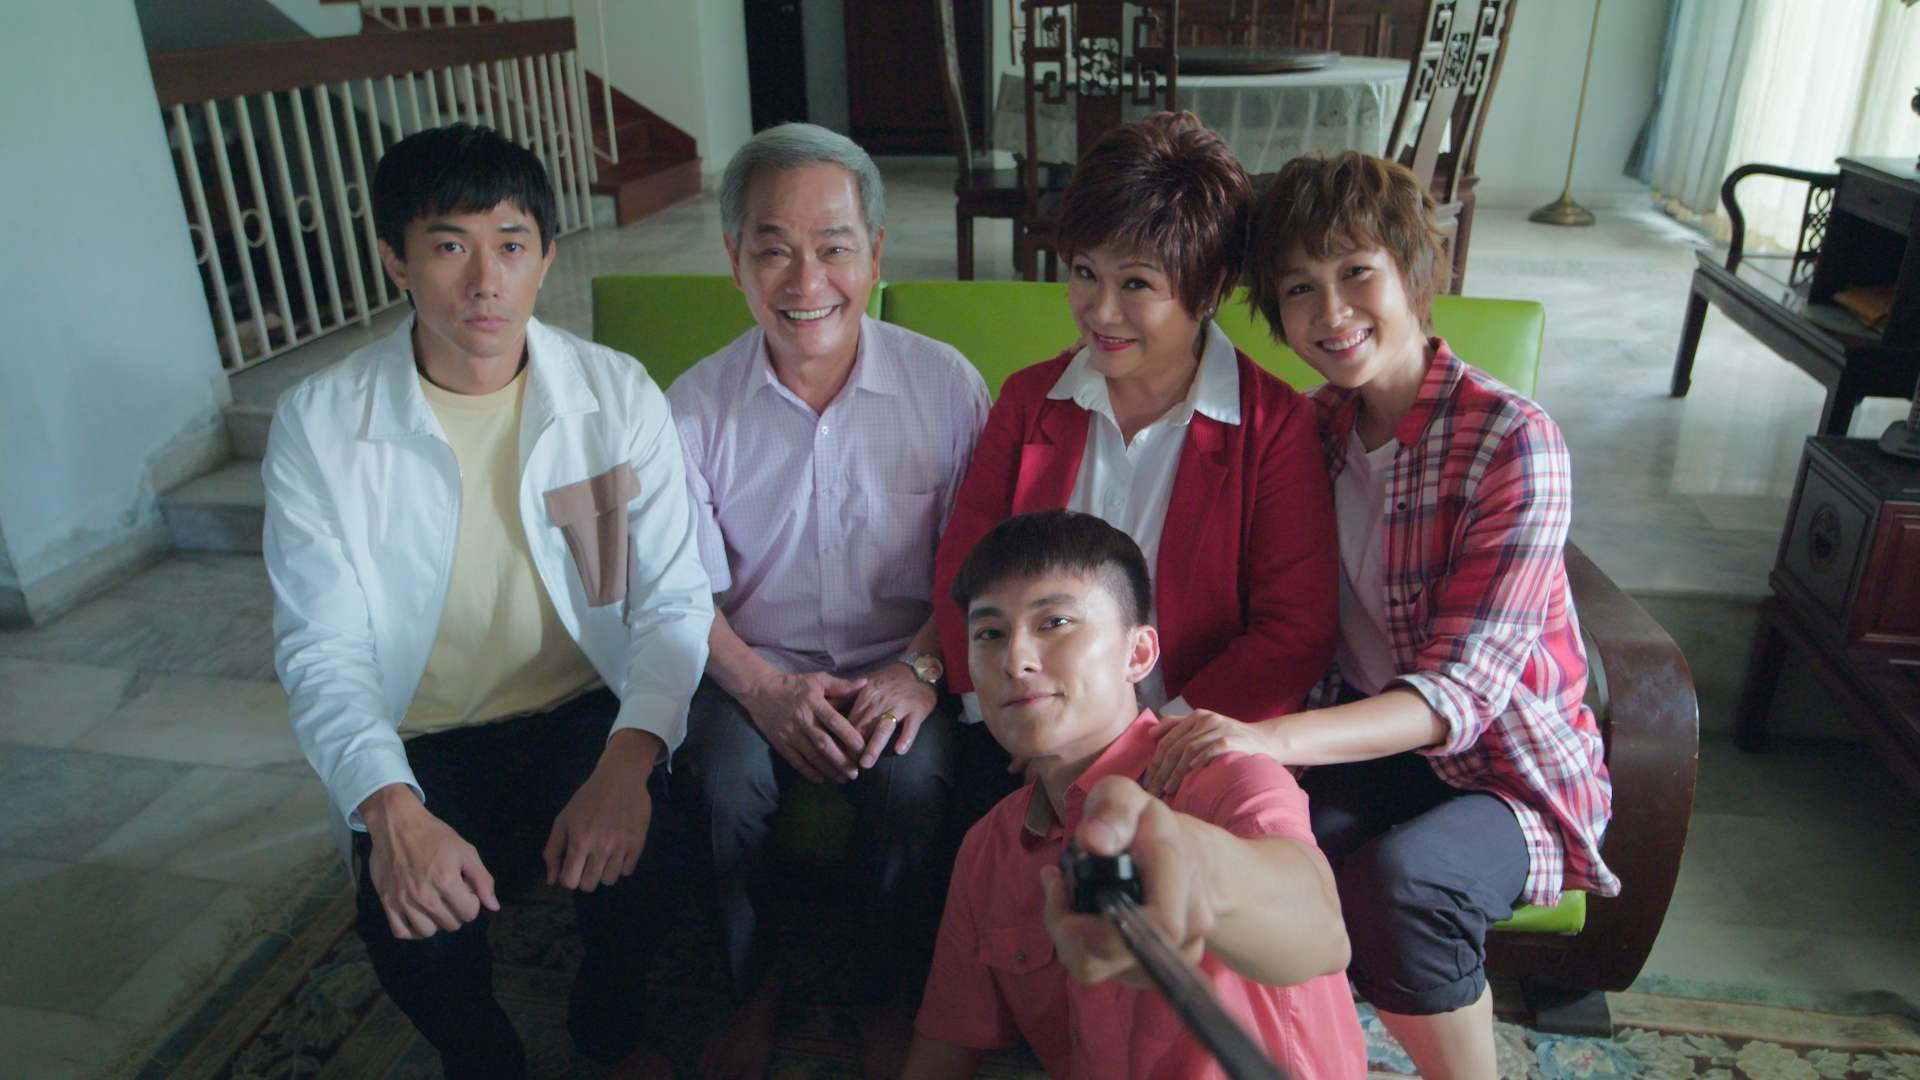 His onscreen family is played by Richard Low, Zheng Wanling, Ya Hui and Edwin Goh